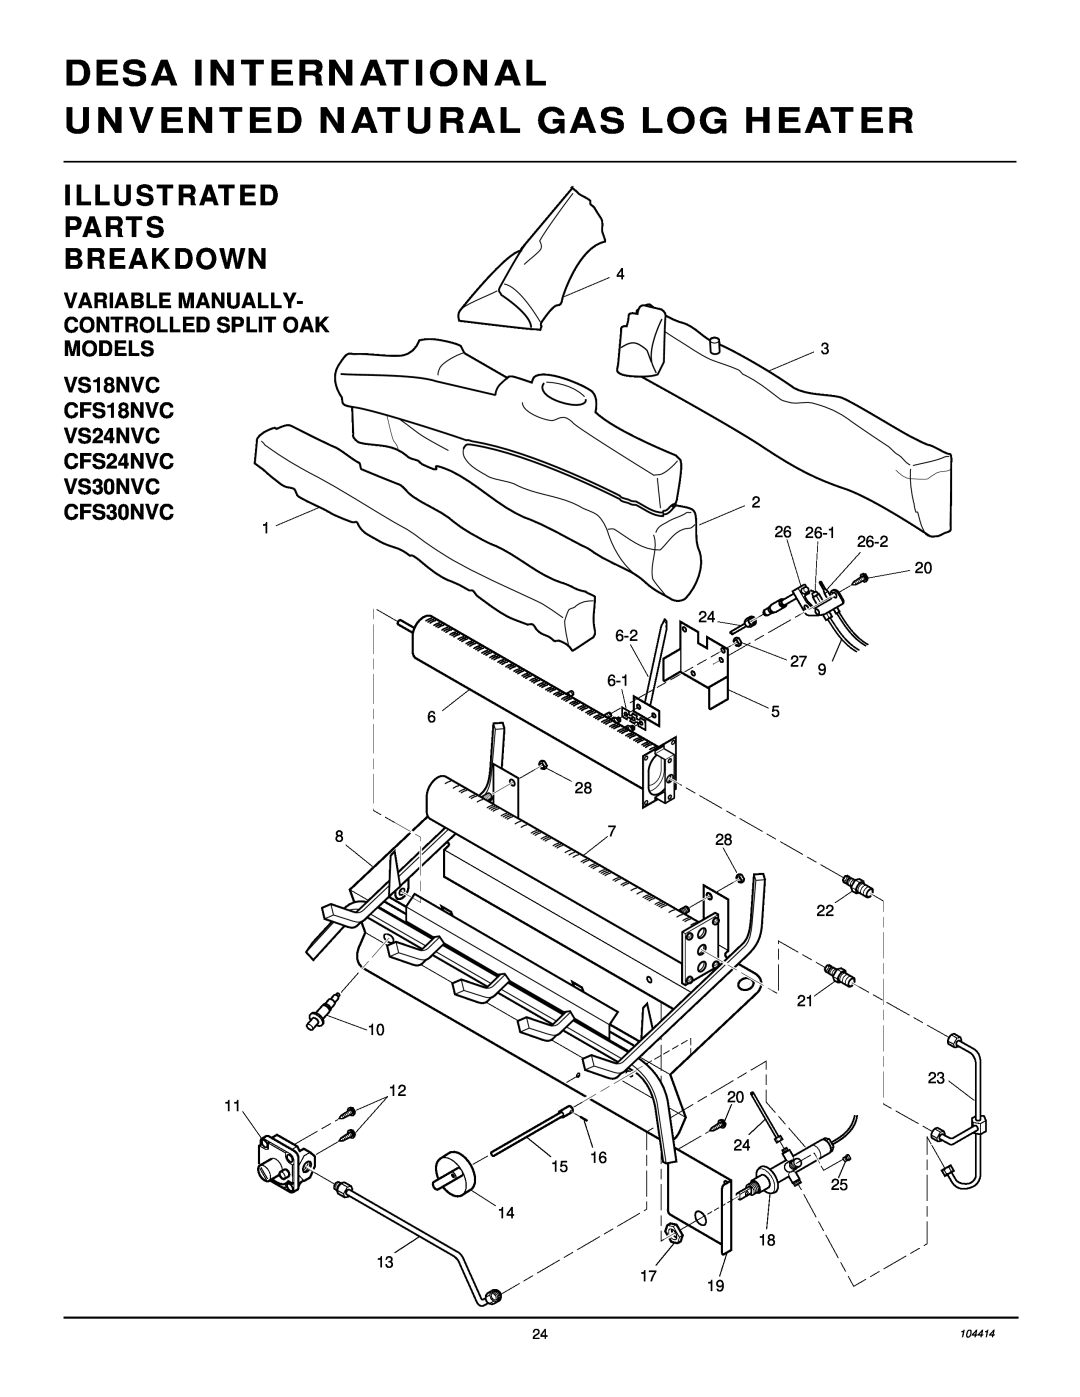 Desa B, C Illustrated Parts Breakdown, Variable Manually Controlled Split Oak Models, CFS30NVC, Desa International 